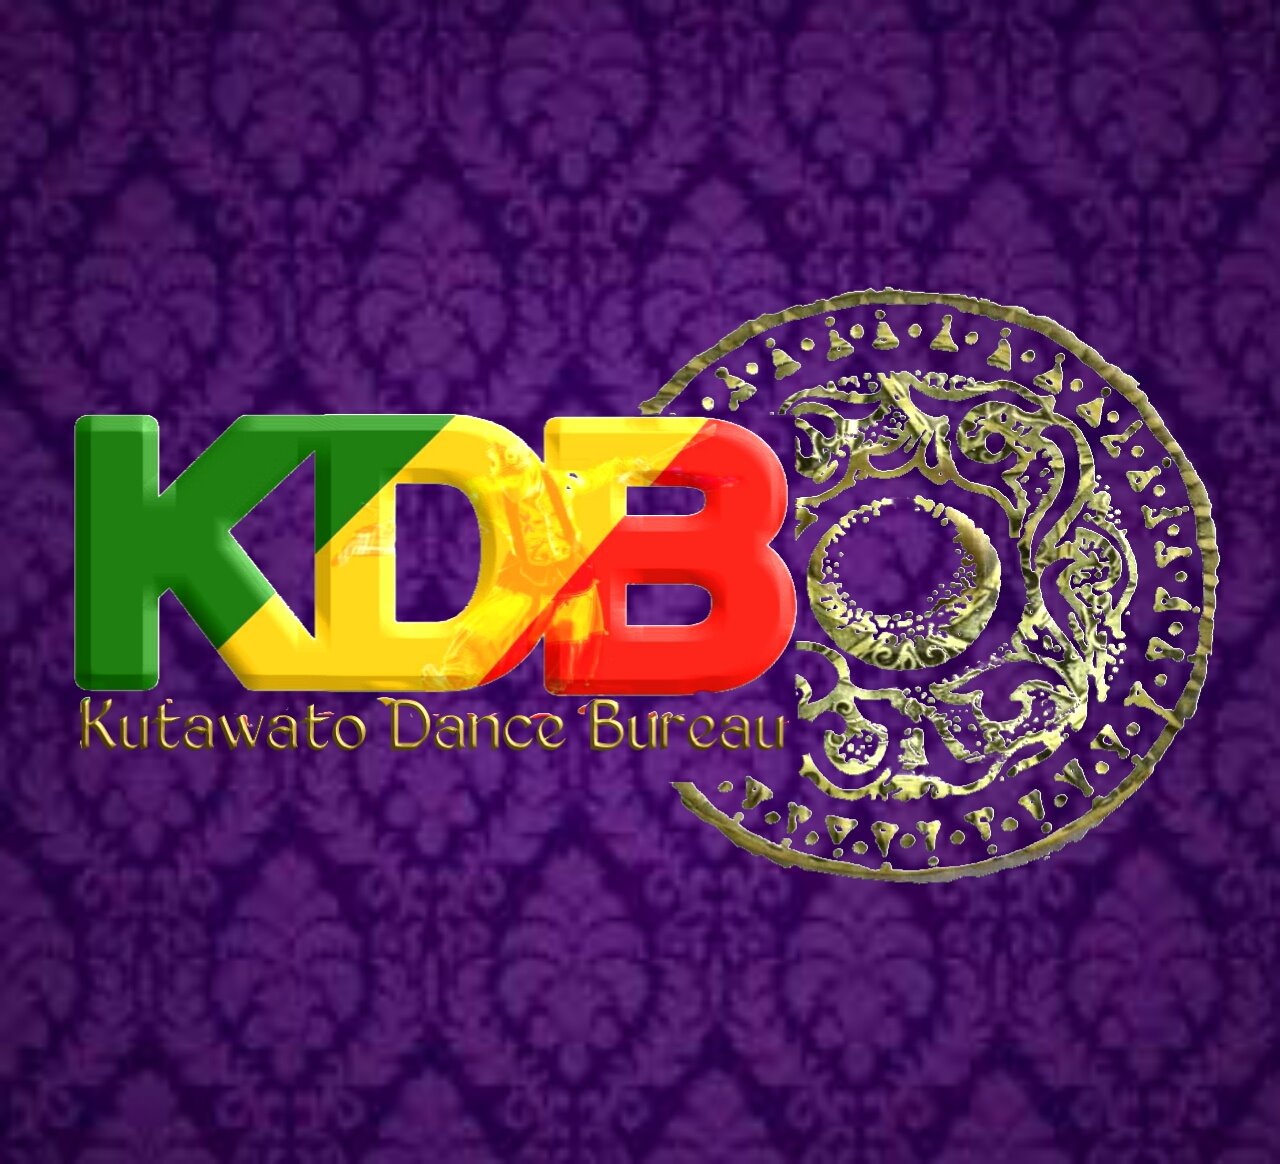 kutawato dance bureau logo